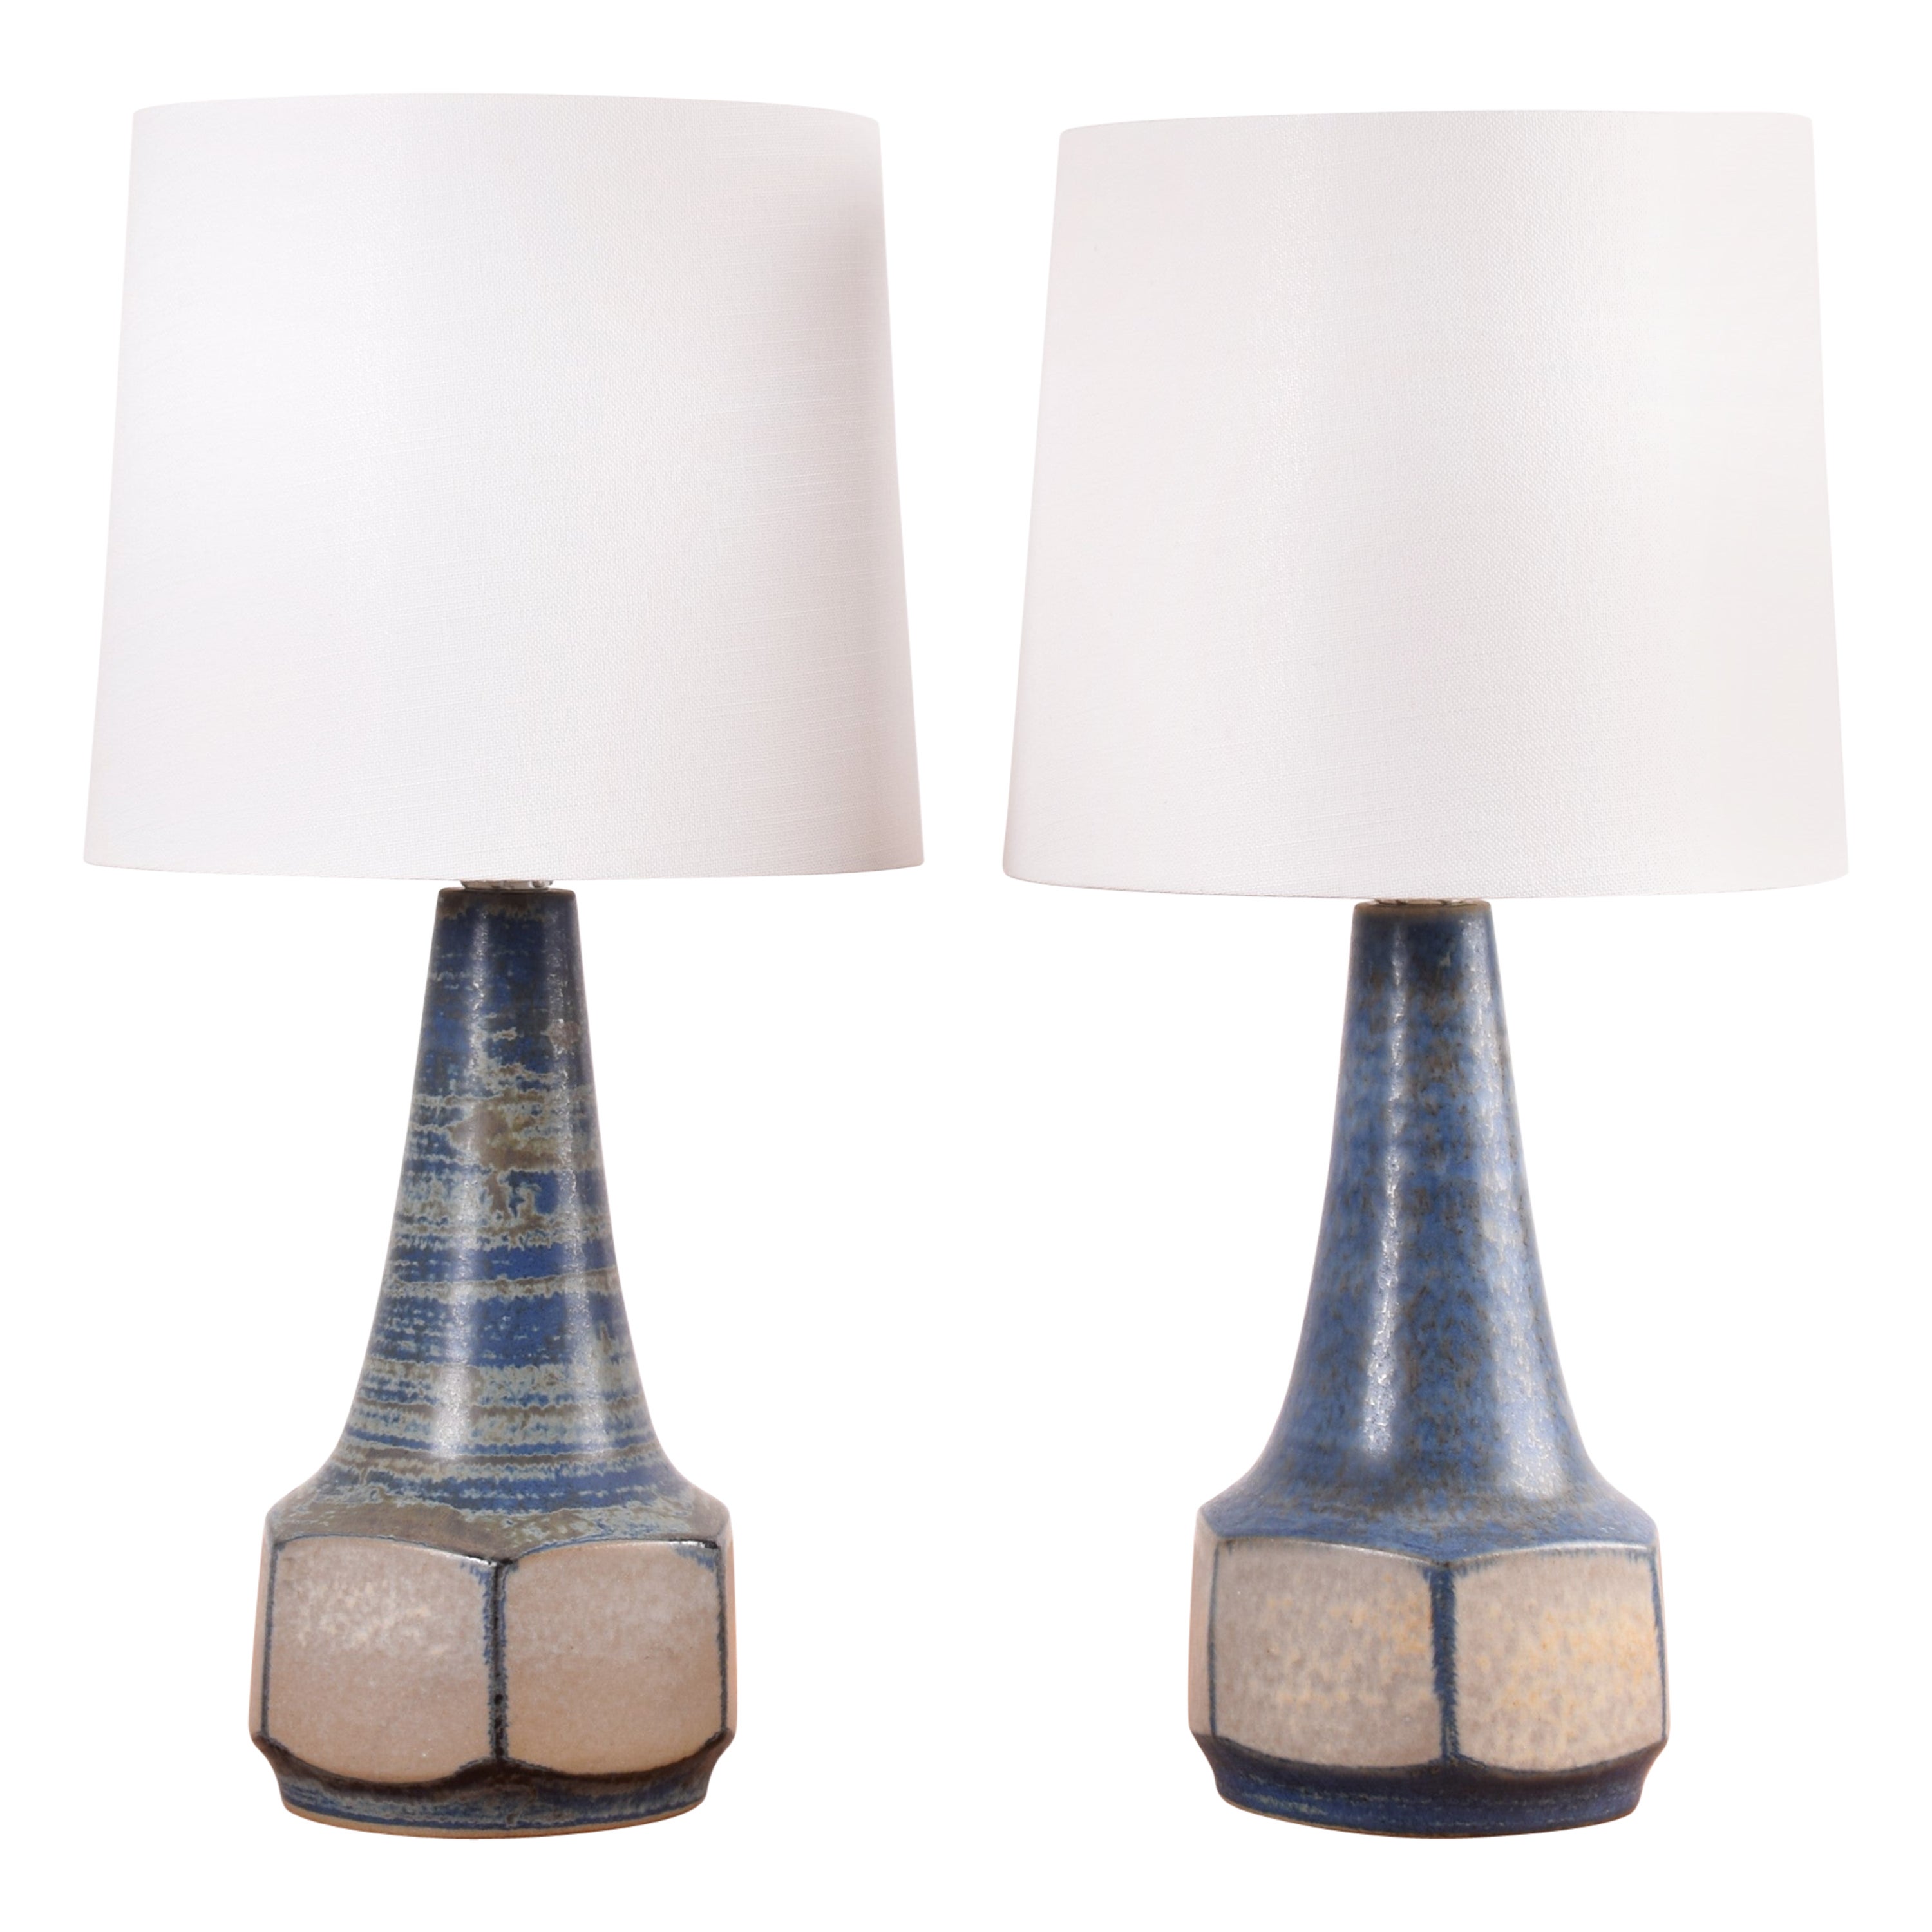 Pair of Michael Andersen Table Lamps by Marianne Starck, Danish Ceramic, 1960s